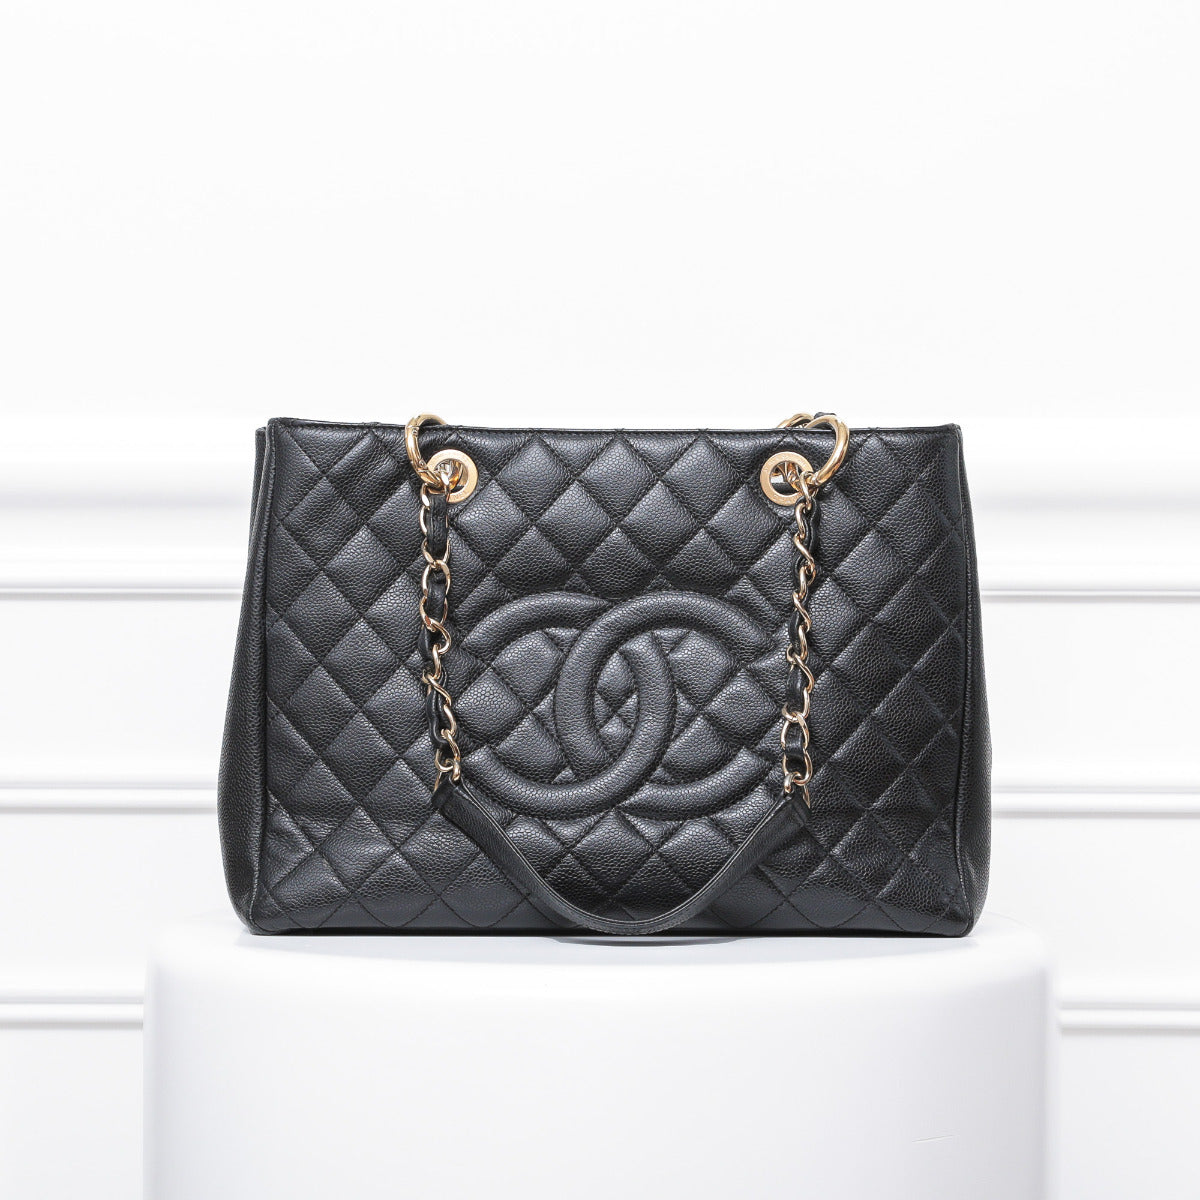 Chanel Black GST Bag